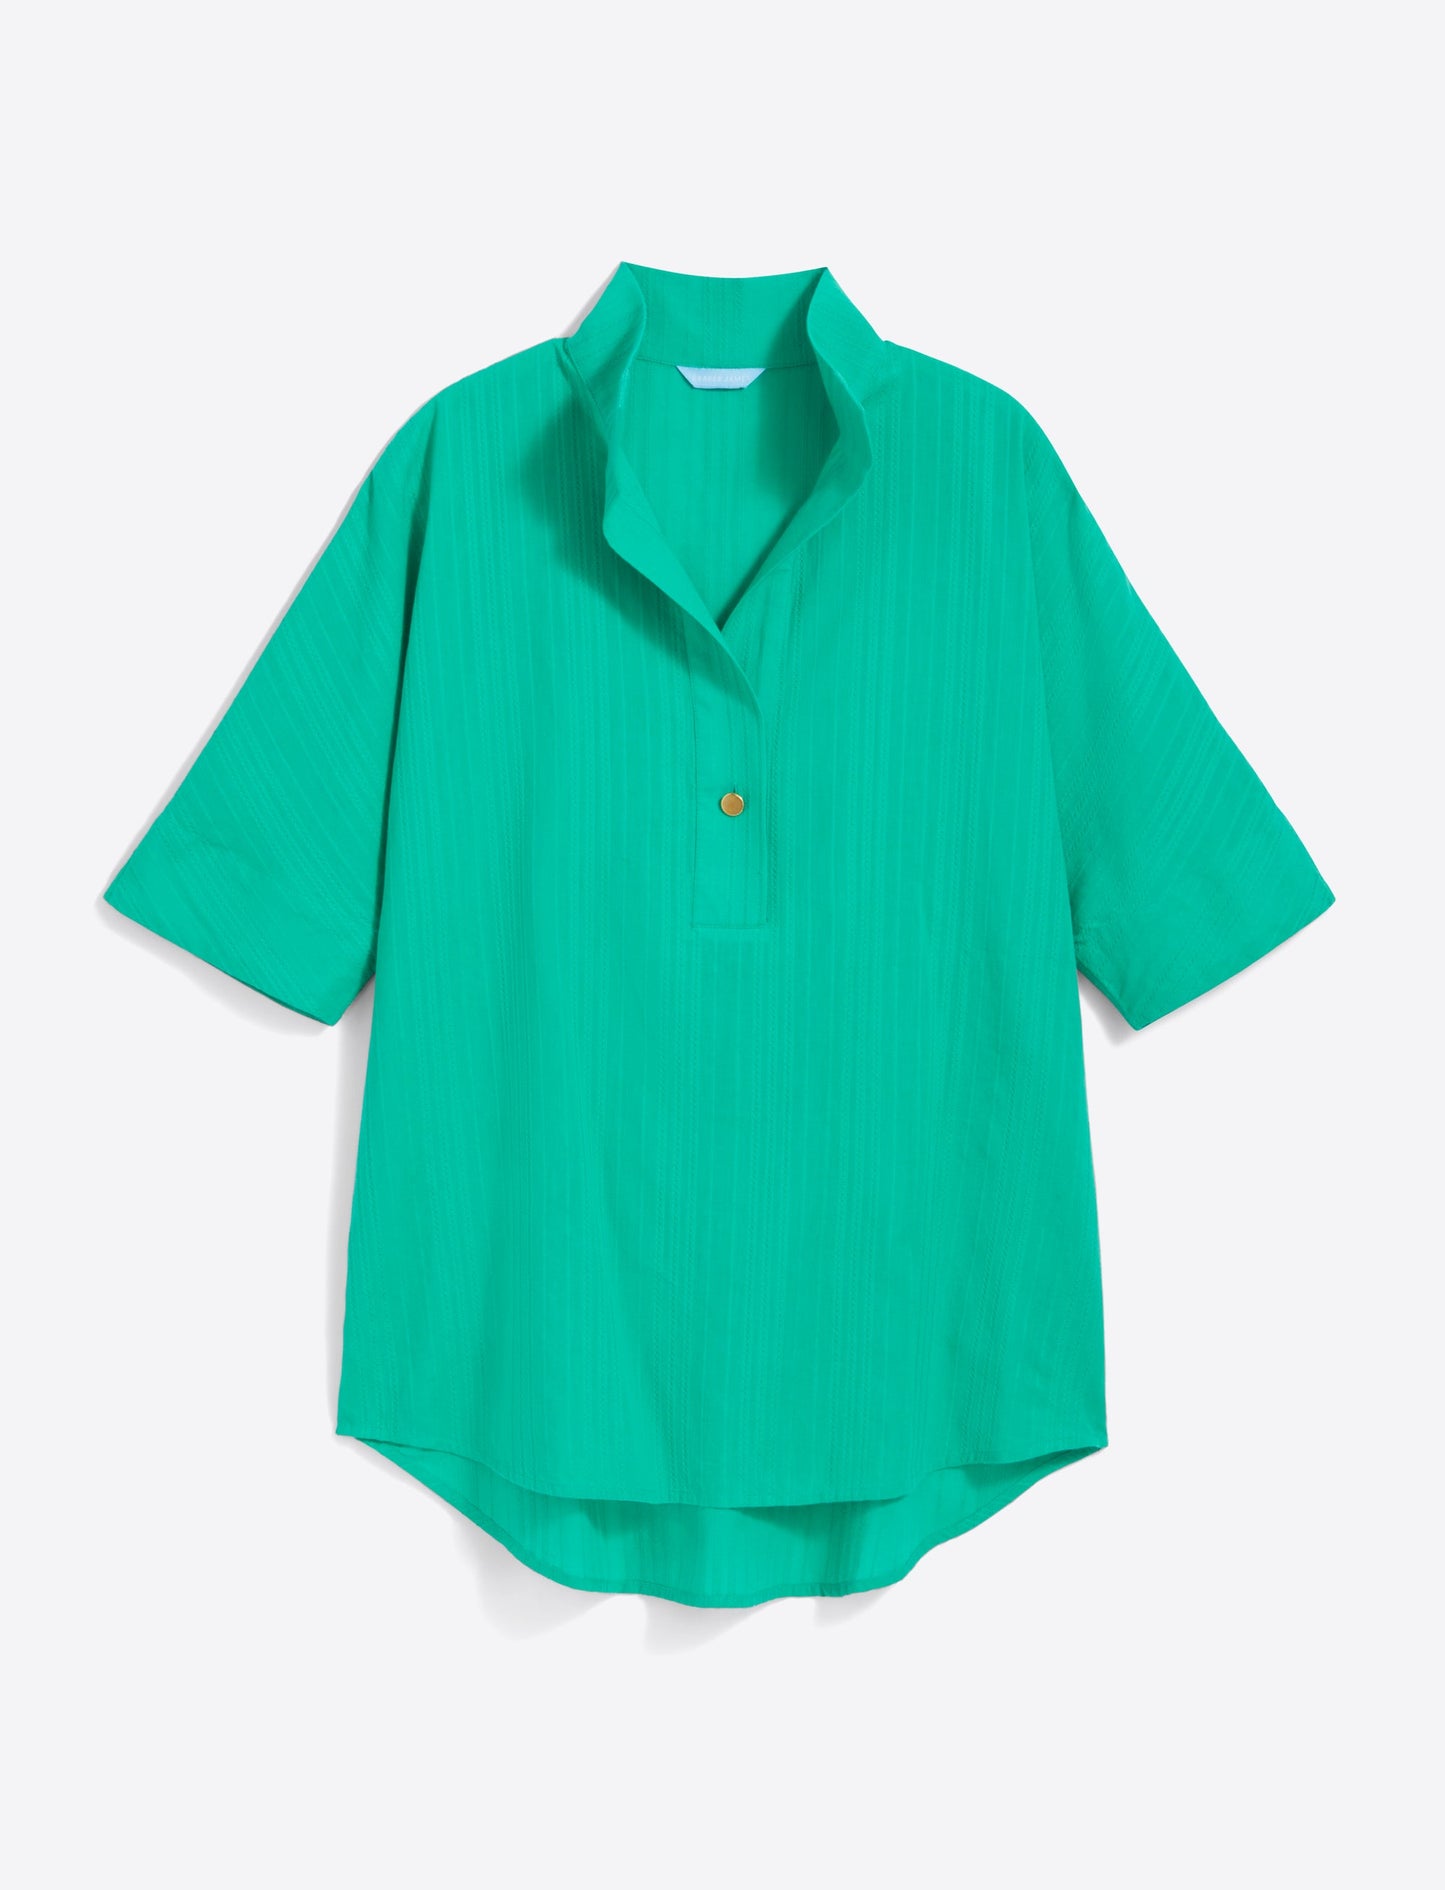 Logan Top in Green Shirting Stripe